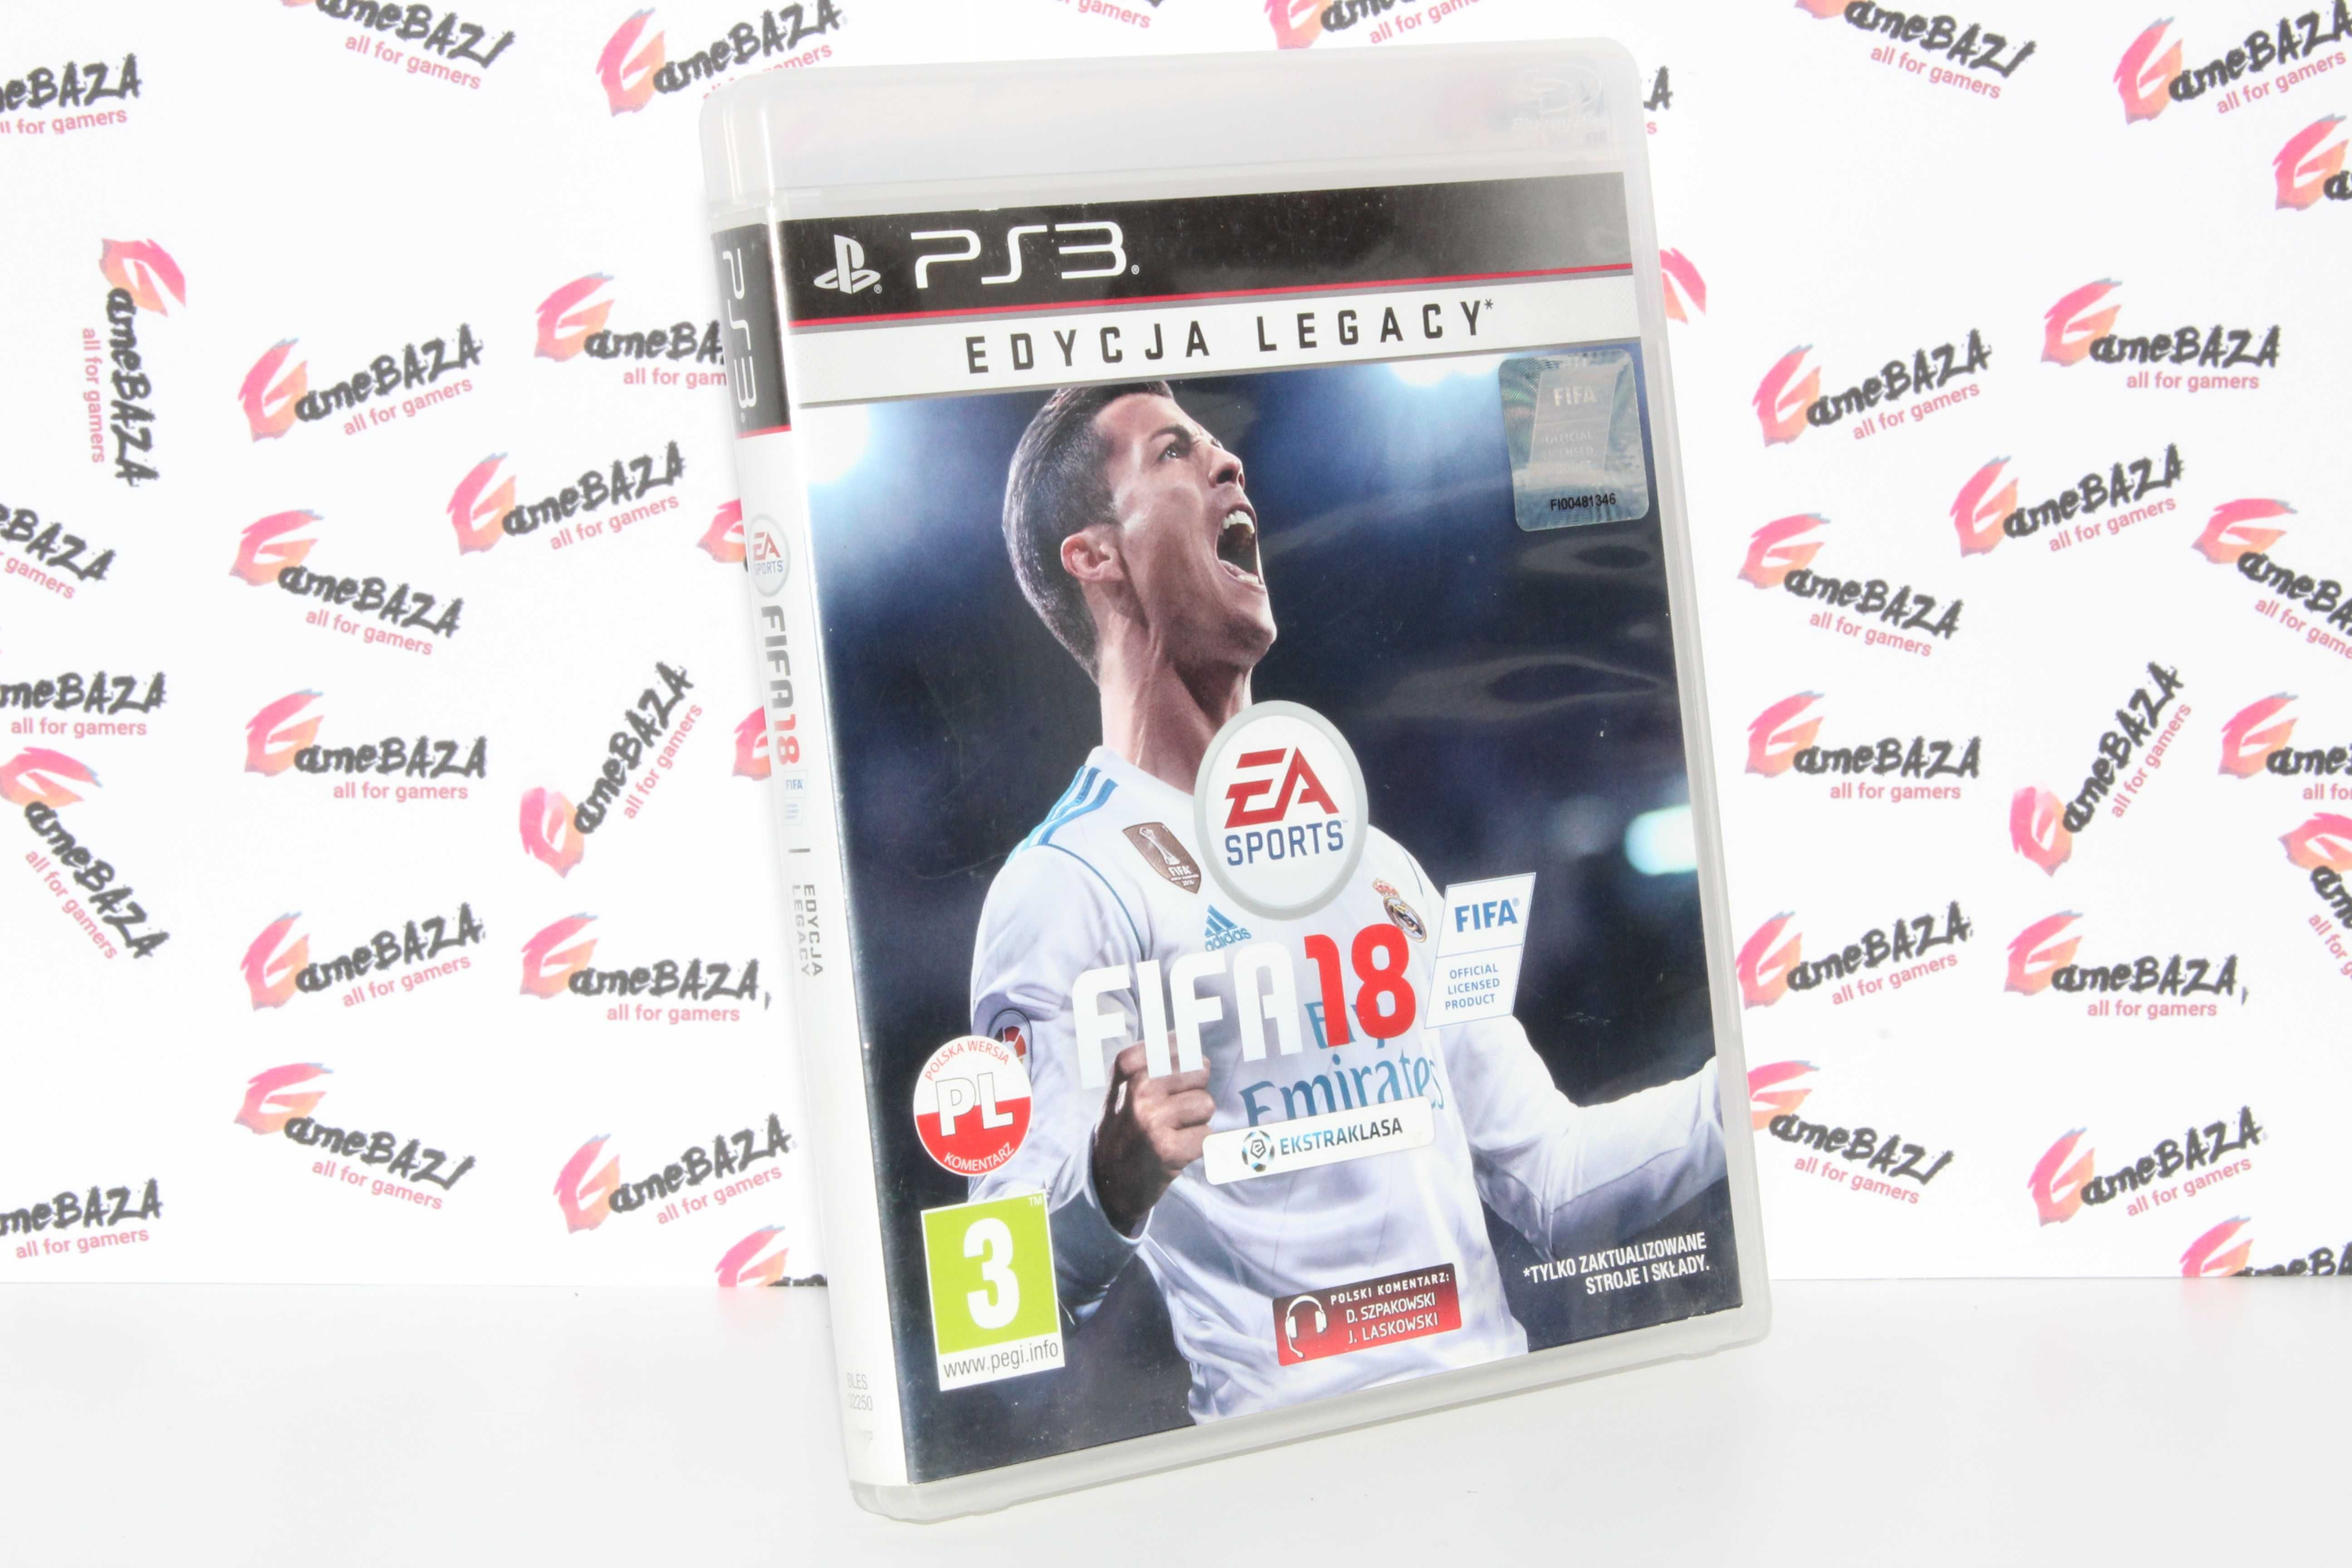 FIFA 18 Edycja Legacy PS3 PL GameBAZA